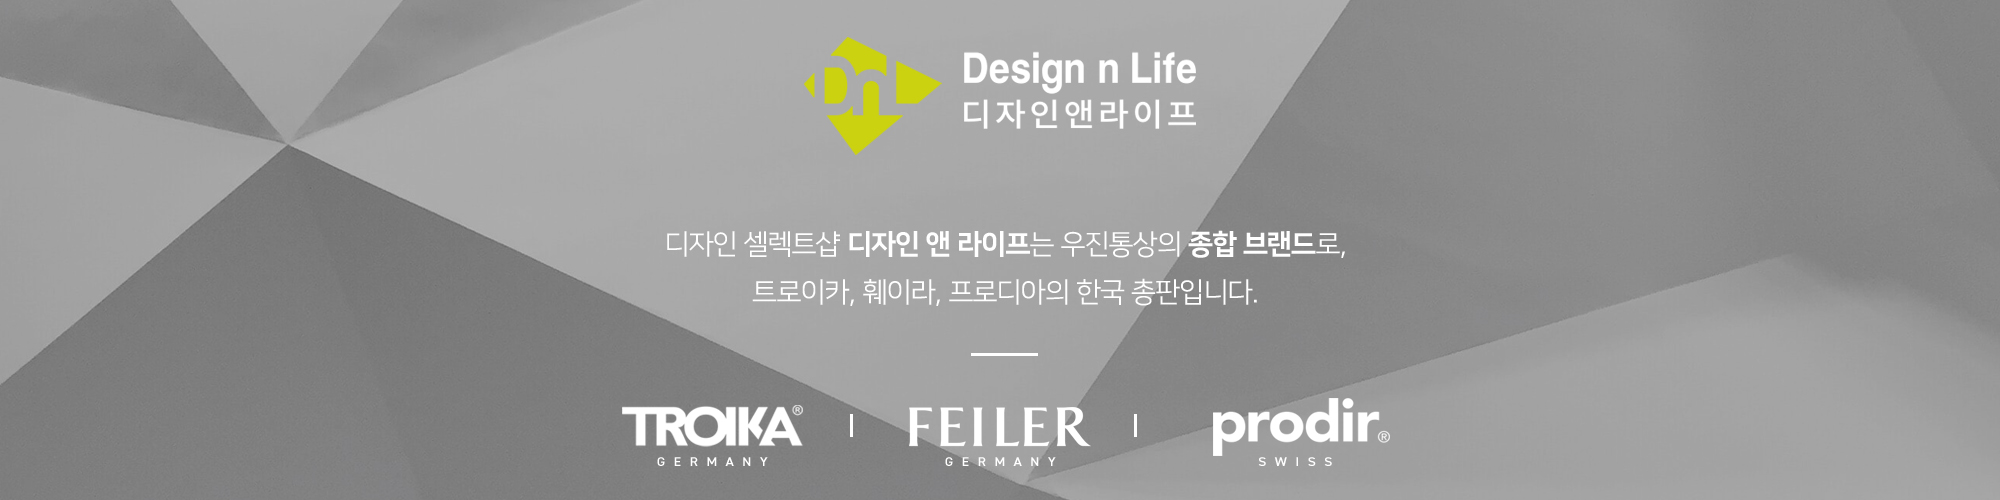 Design n Life